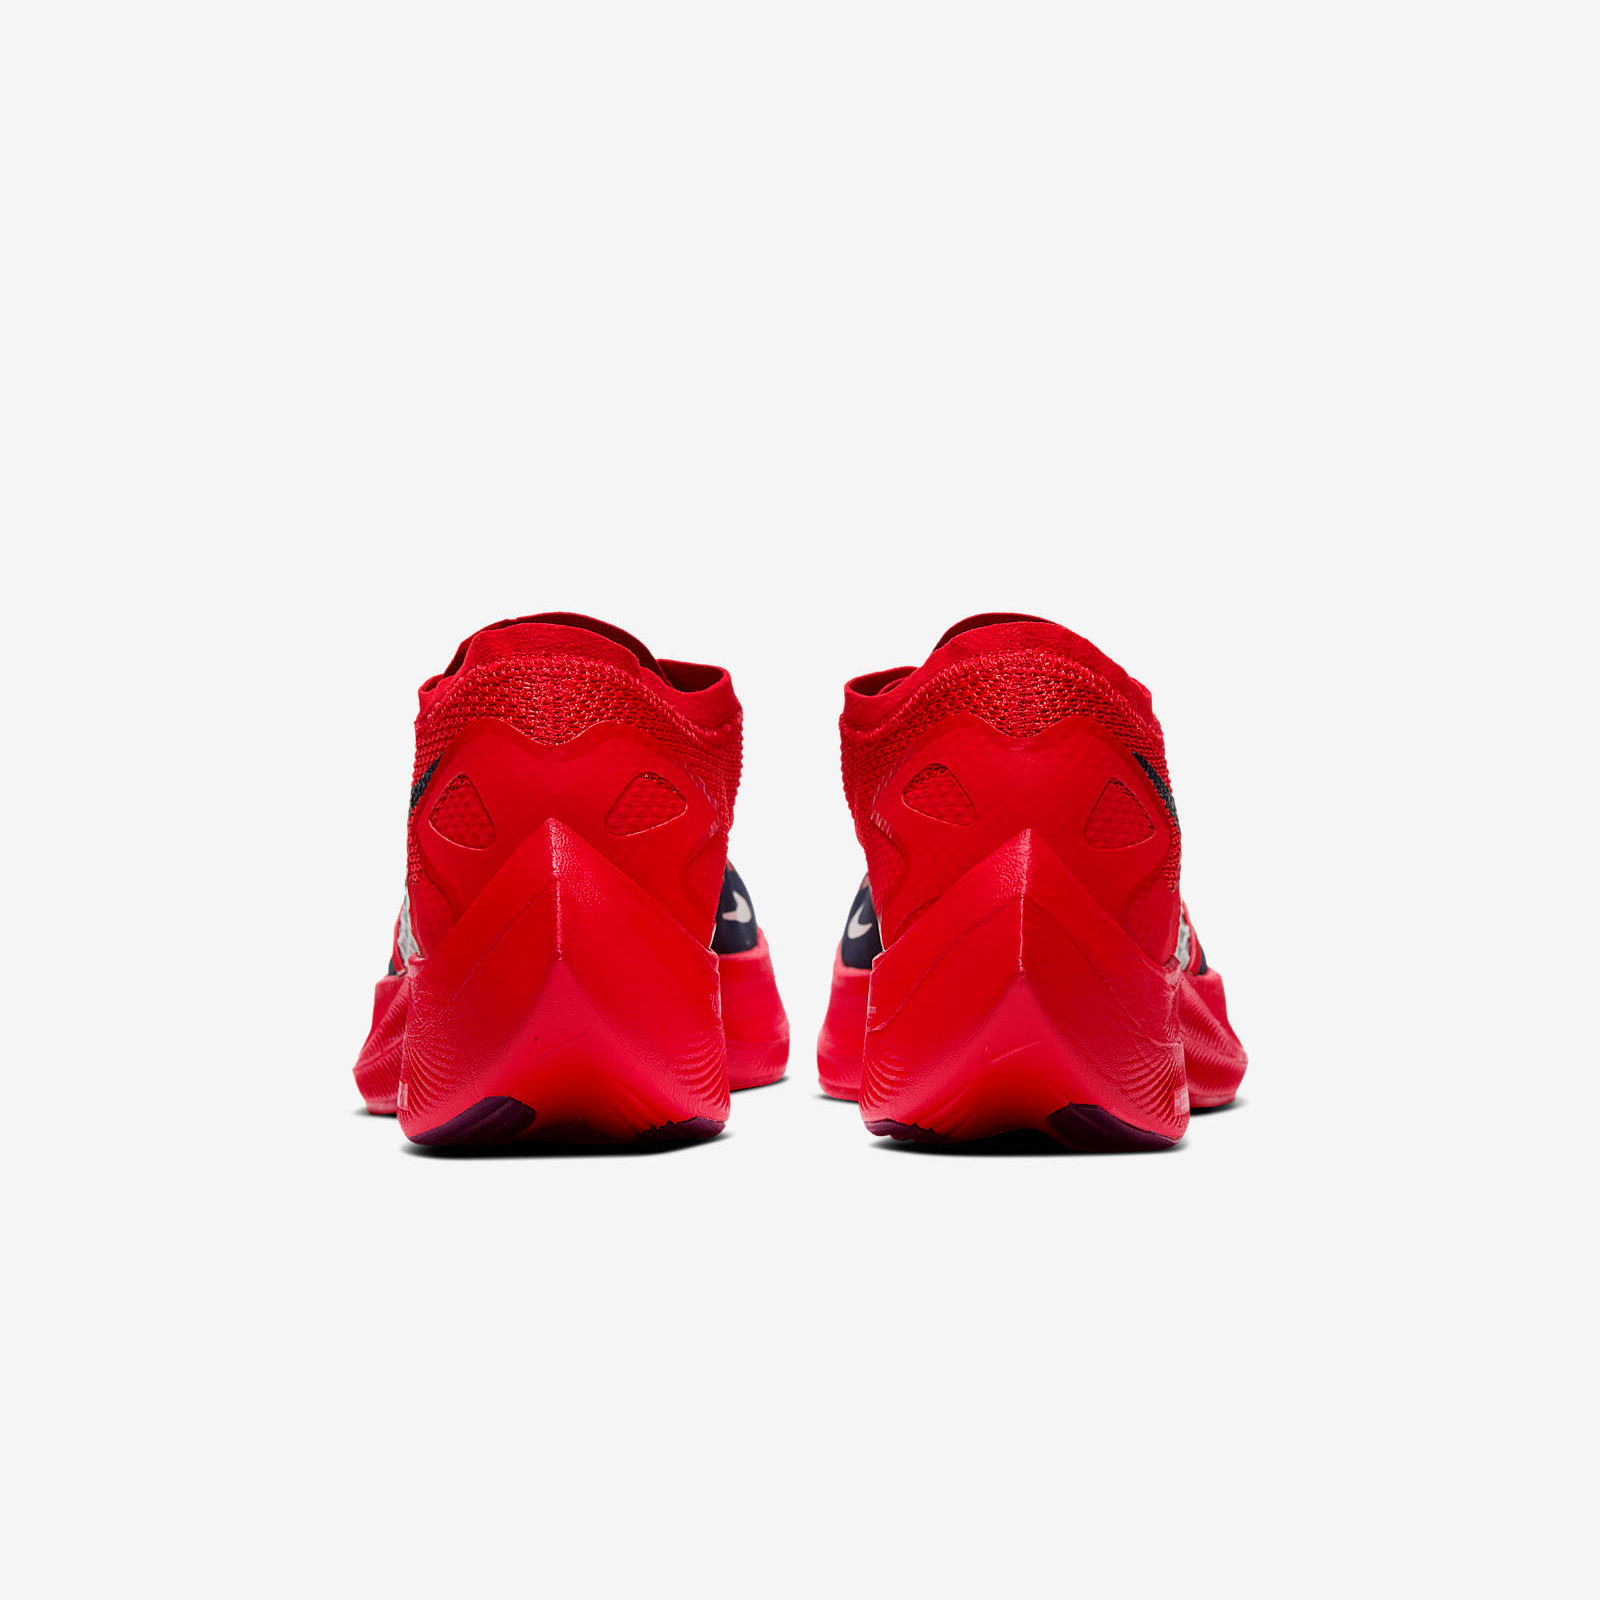 Nike Gyakusou
ZoomX Vaporfly
Red / Blue